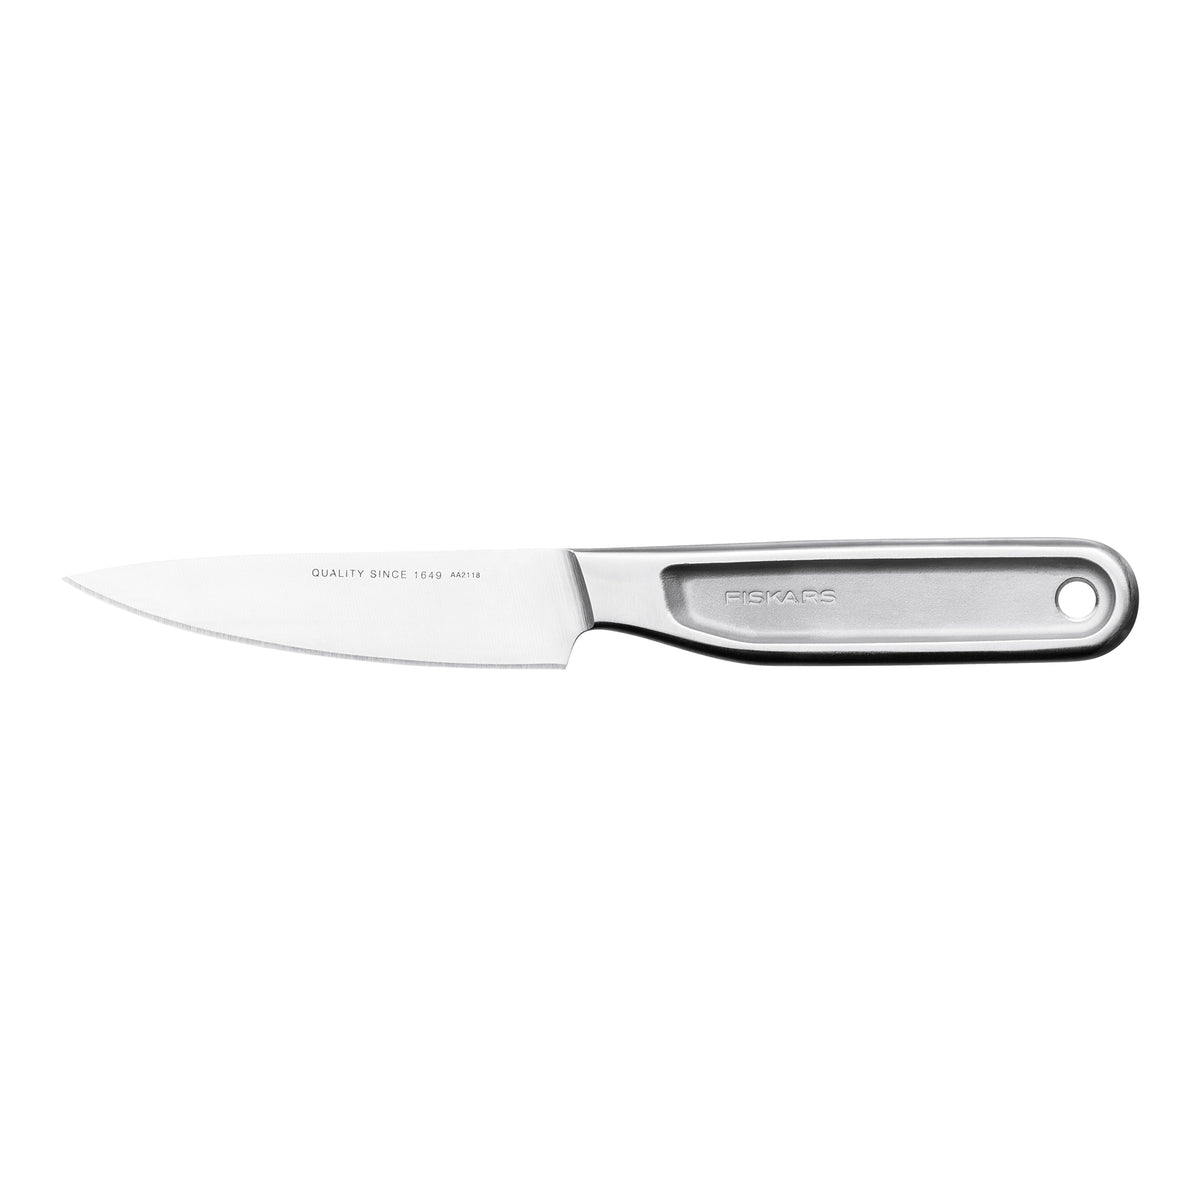 All Steel Paring Knife 10cm - fiskars - Bluecashew Kitchen Homestead